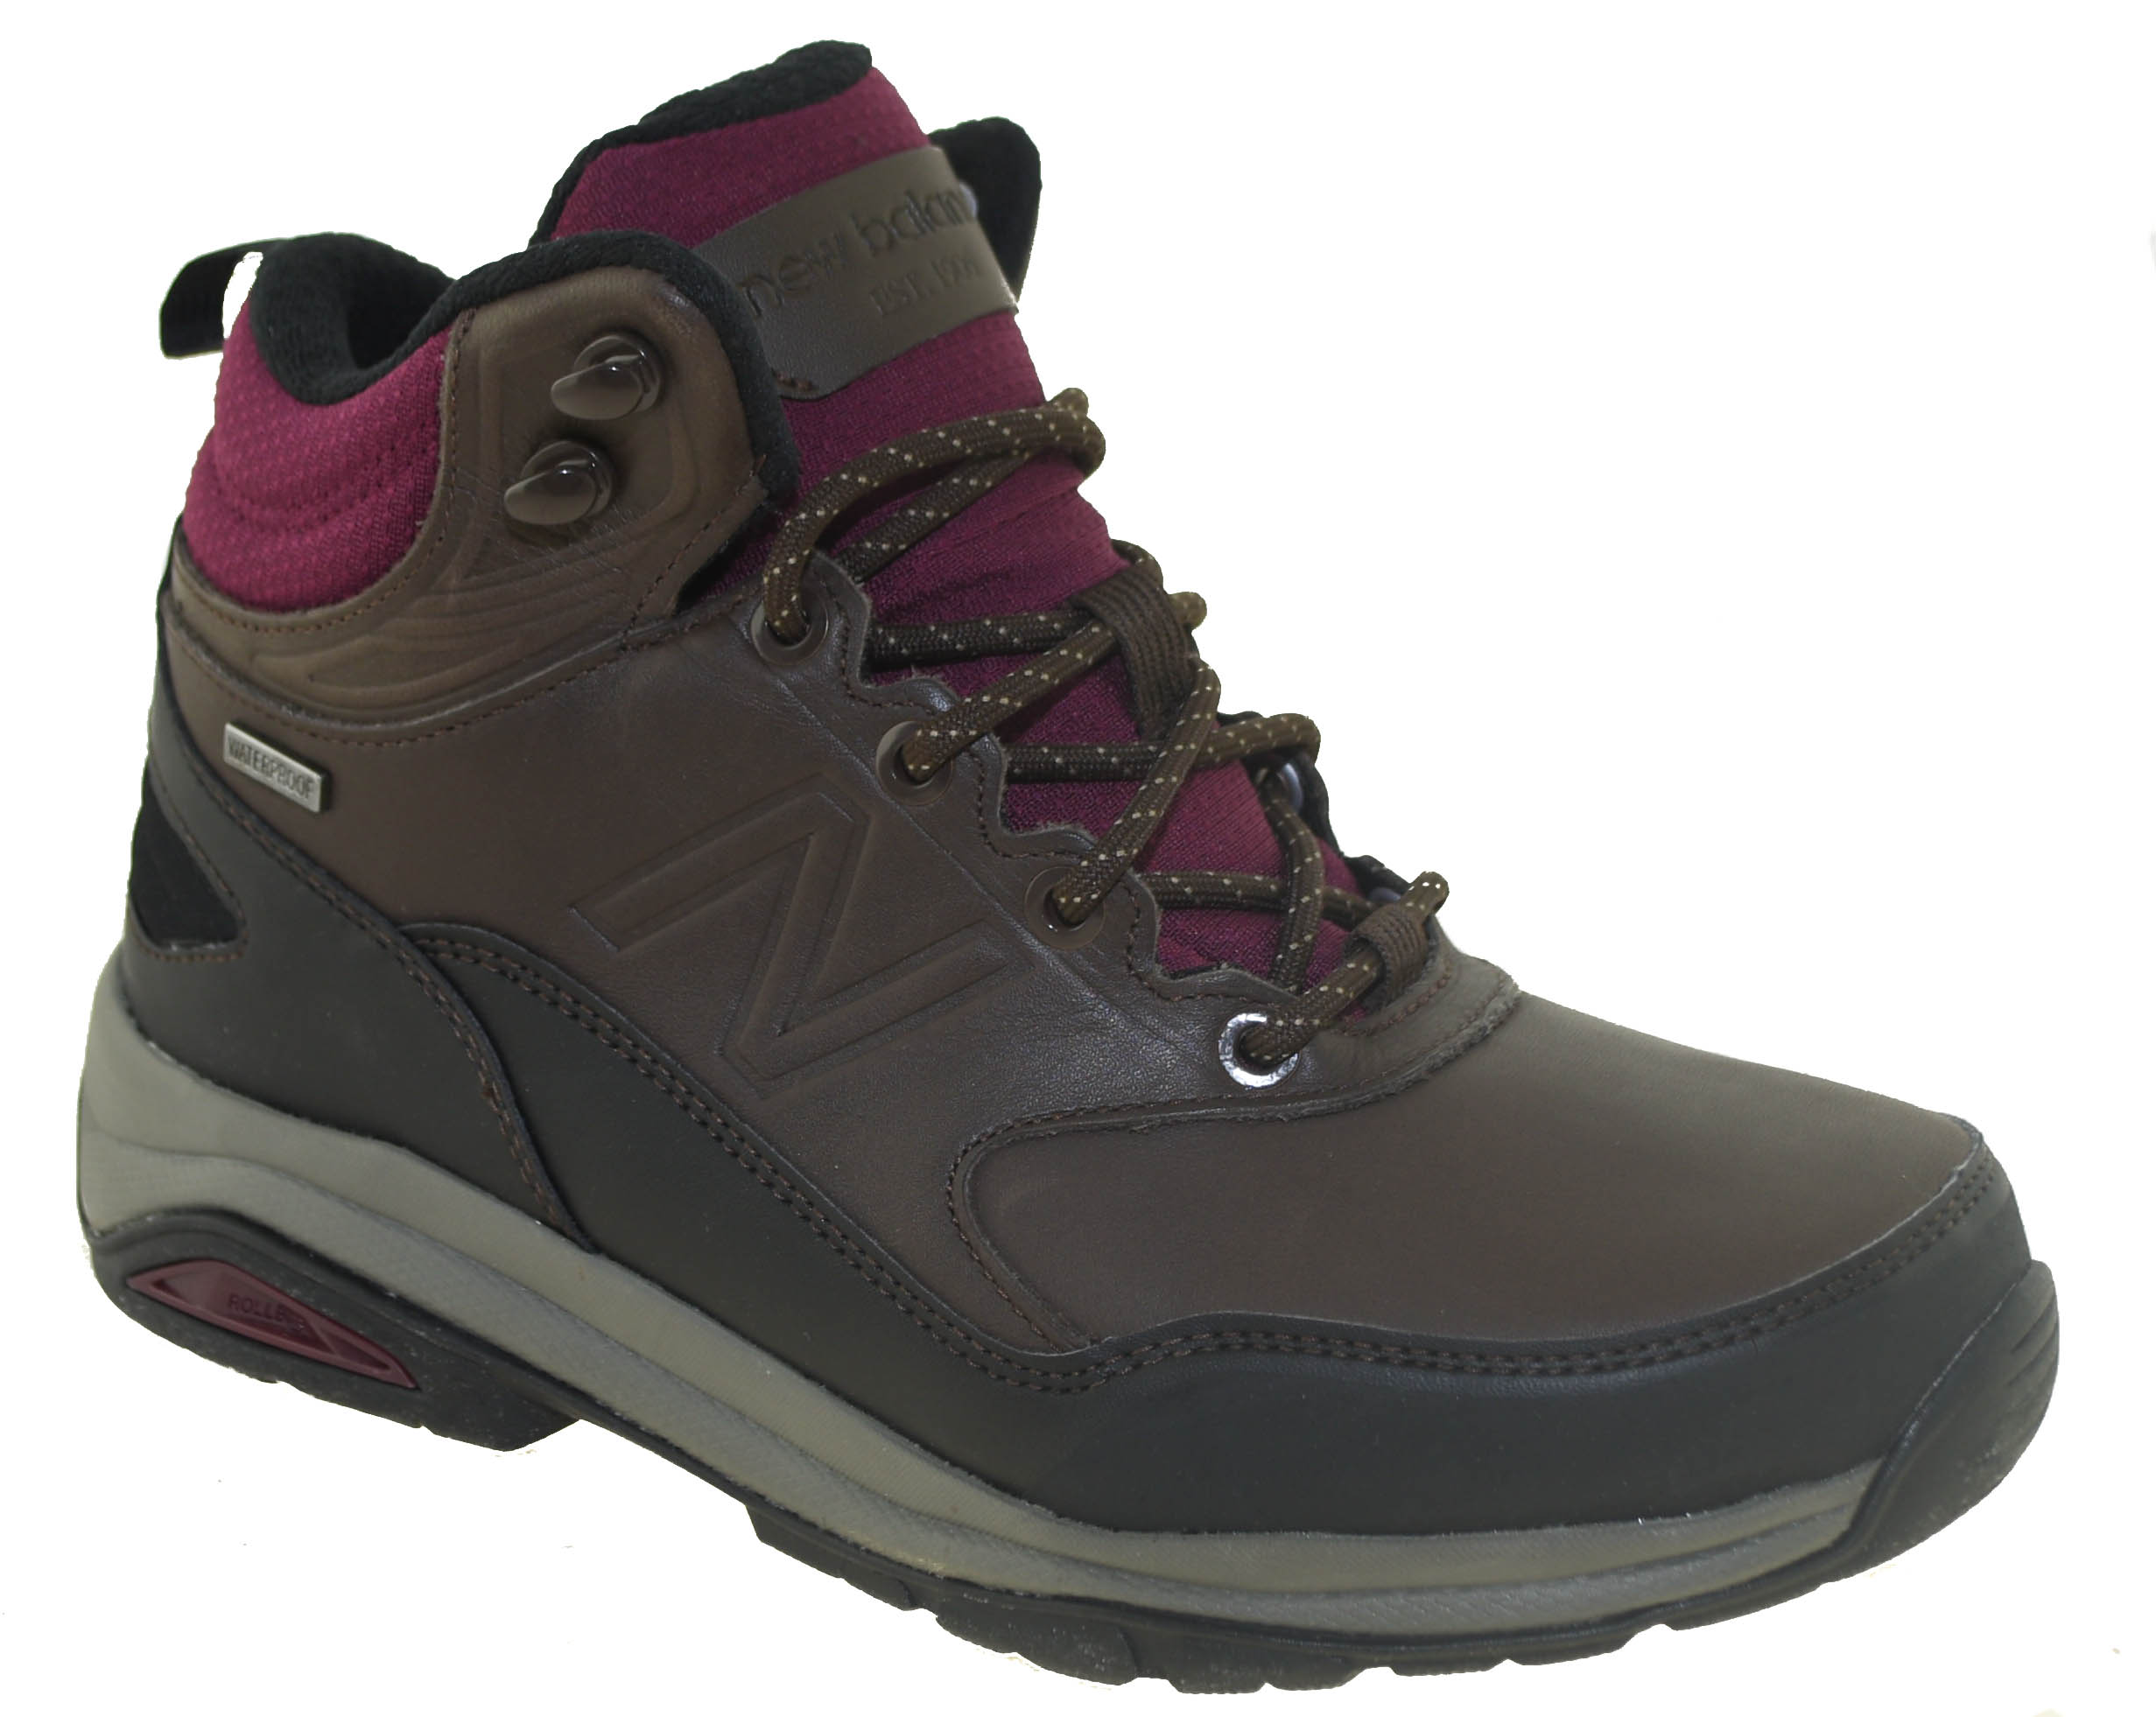 New Balance Women's 1400v1 Hiking Boots Style WW1400DB | eBay